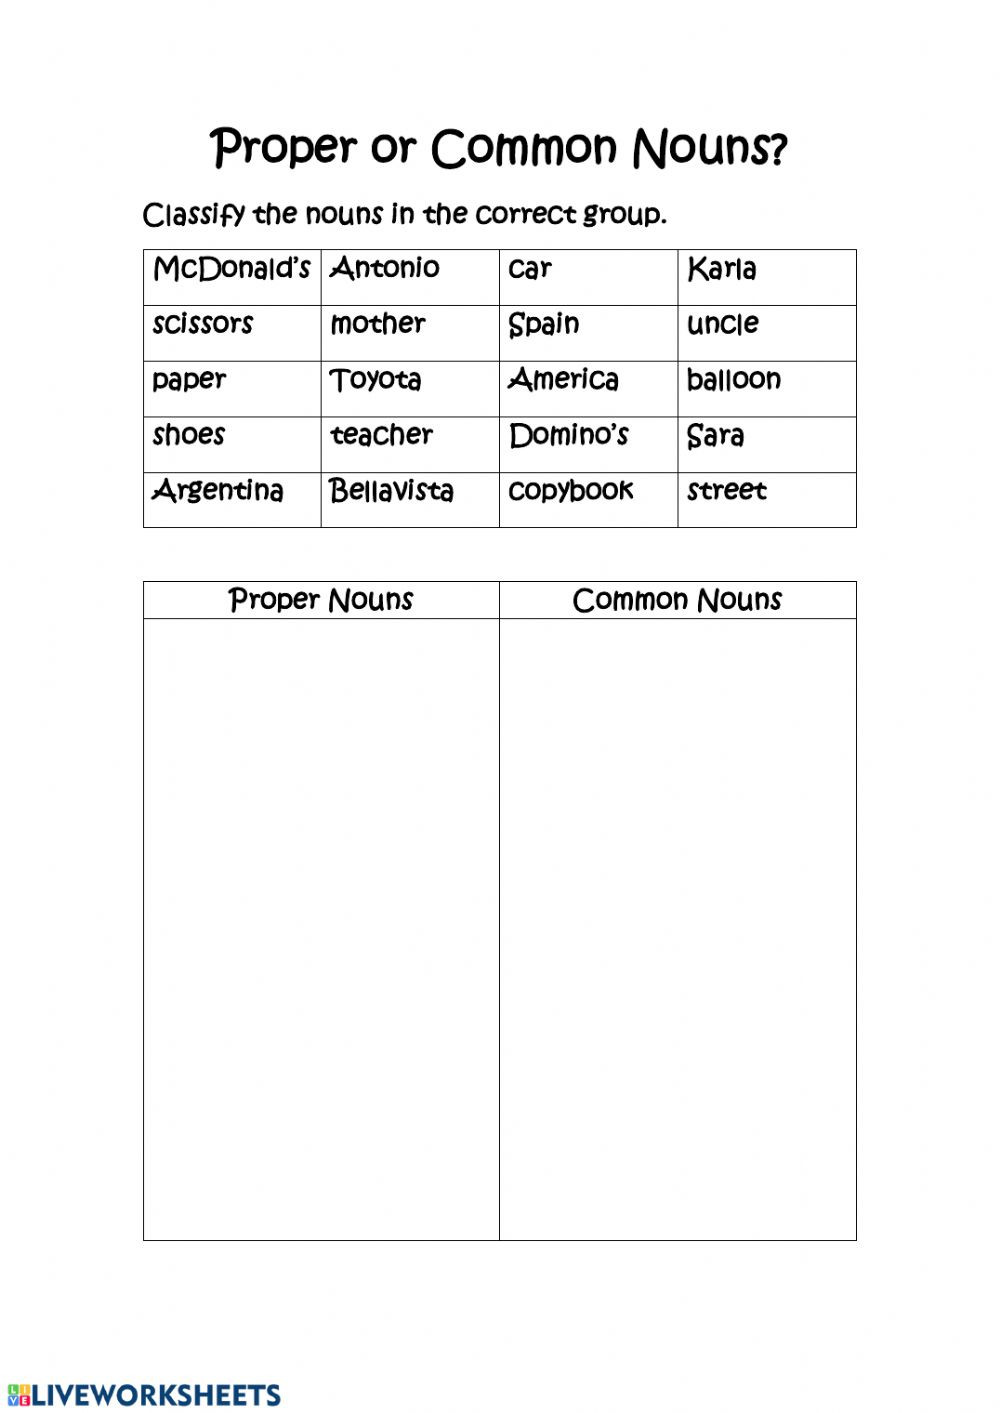 2nd Grade Proper Nouns Worksheet Proper or Mon Nouns Interactive Worksheet